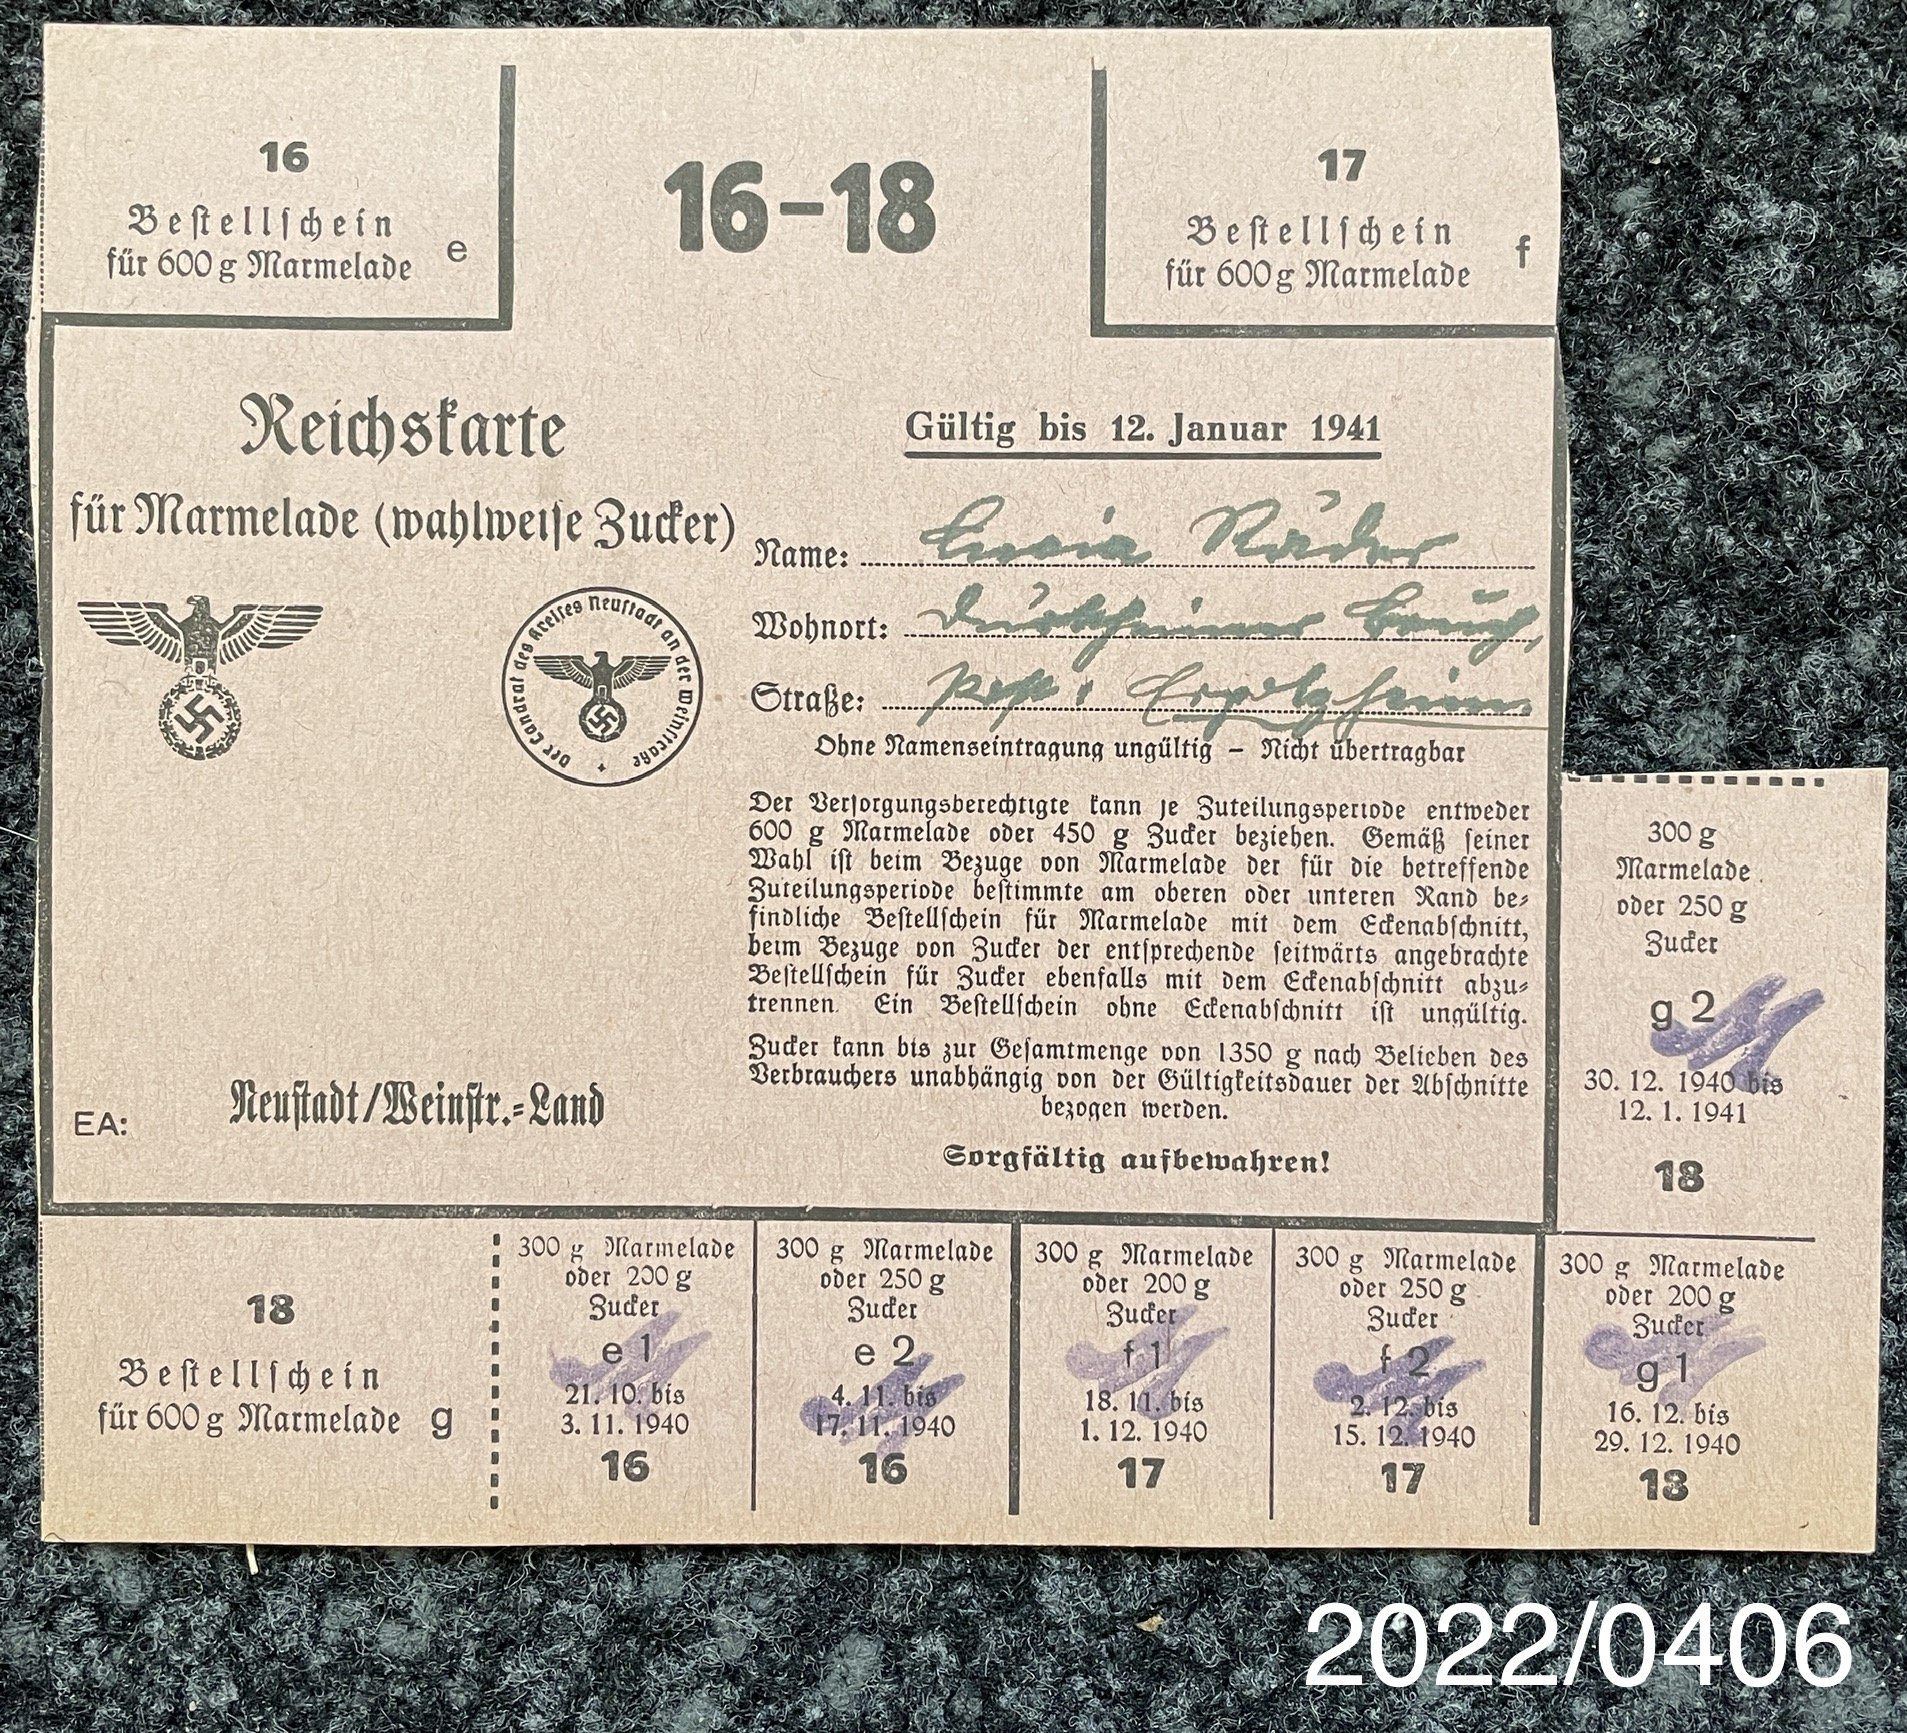 Reichskarte für Marmelade 1940/41 (Stadtmuseum Bad Dürkheim im Kulturzentrum Haus Catoir CC BY-NC-SA)